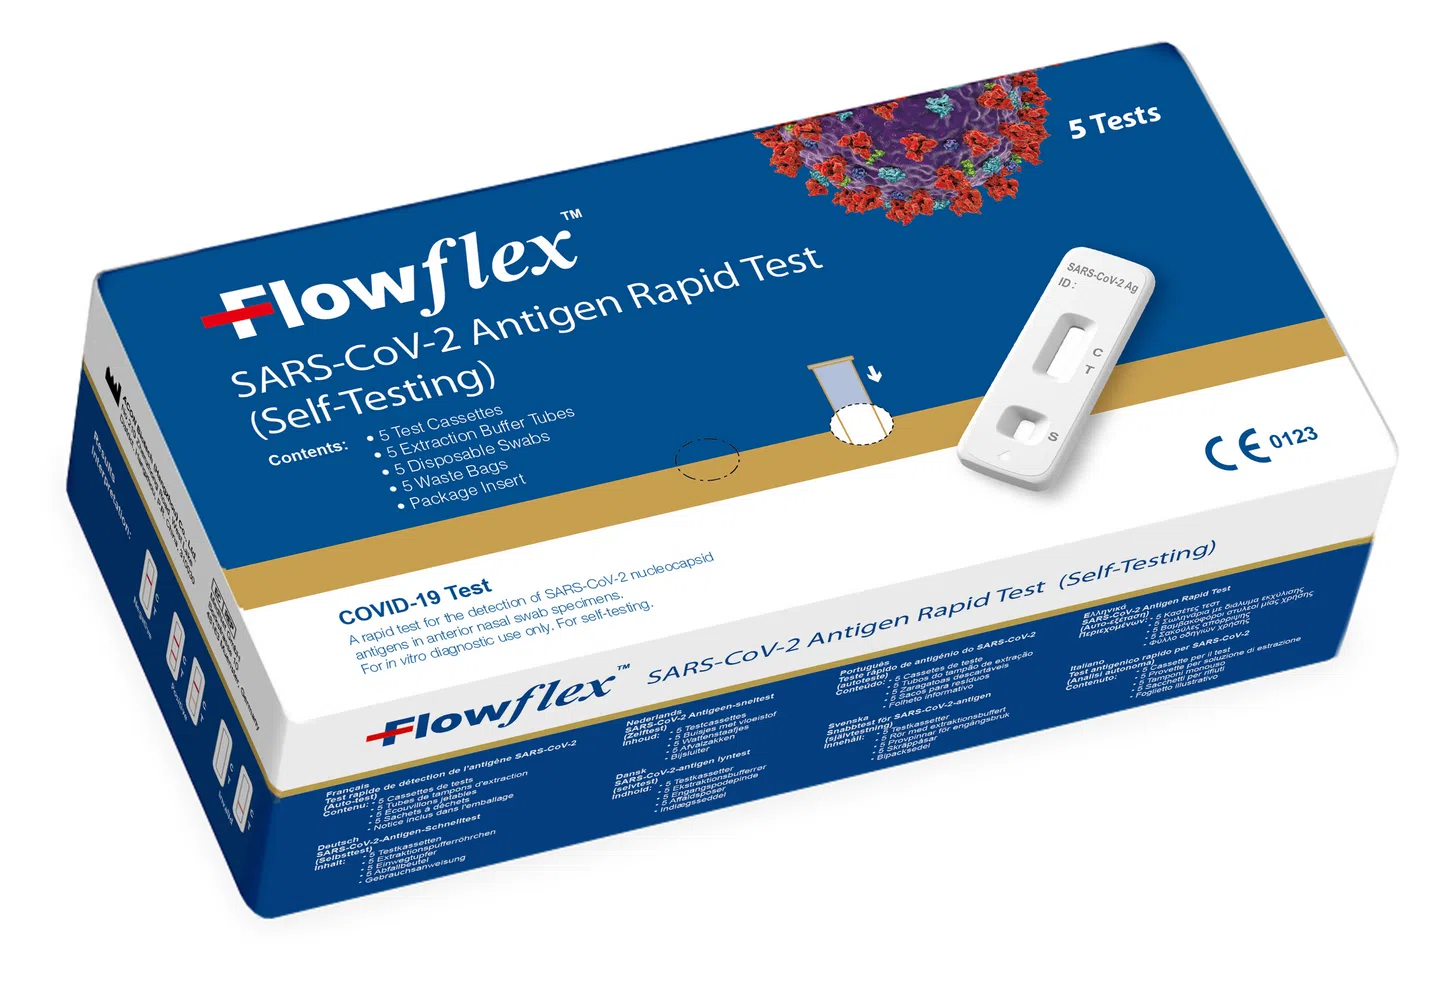 FlowFlex Rapid Antigen Test